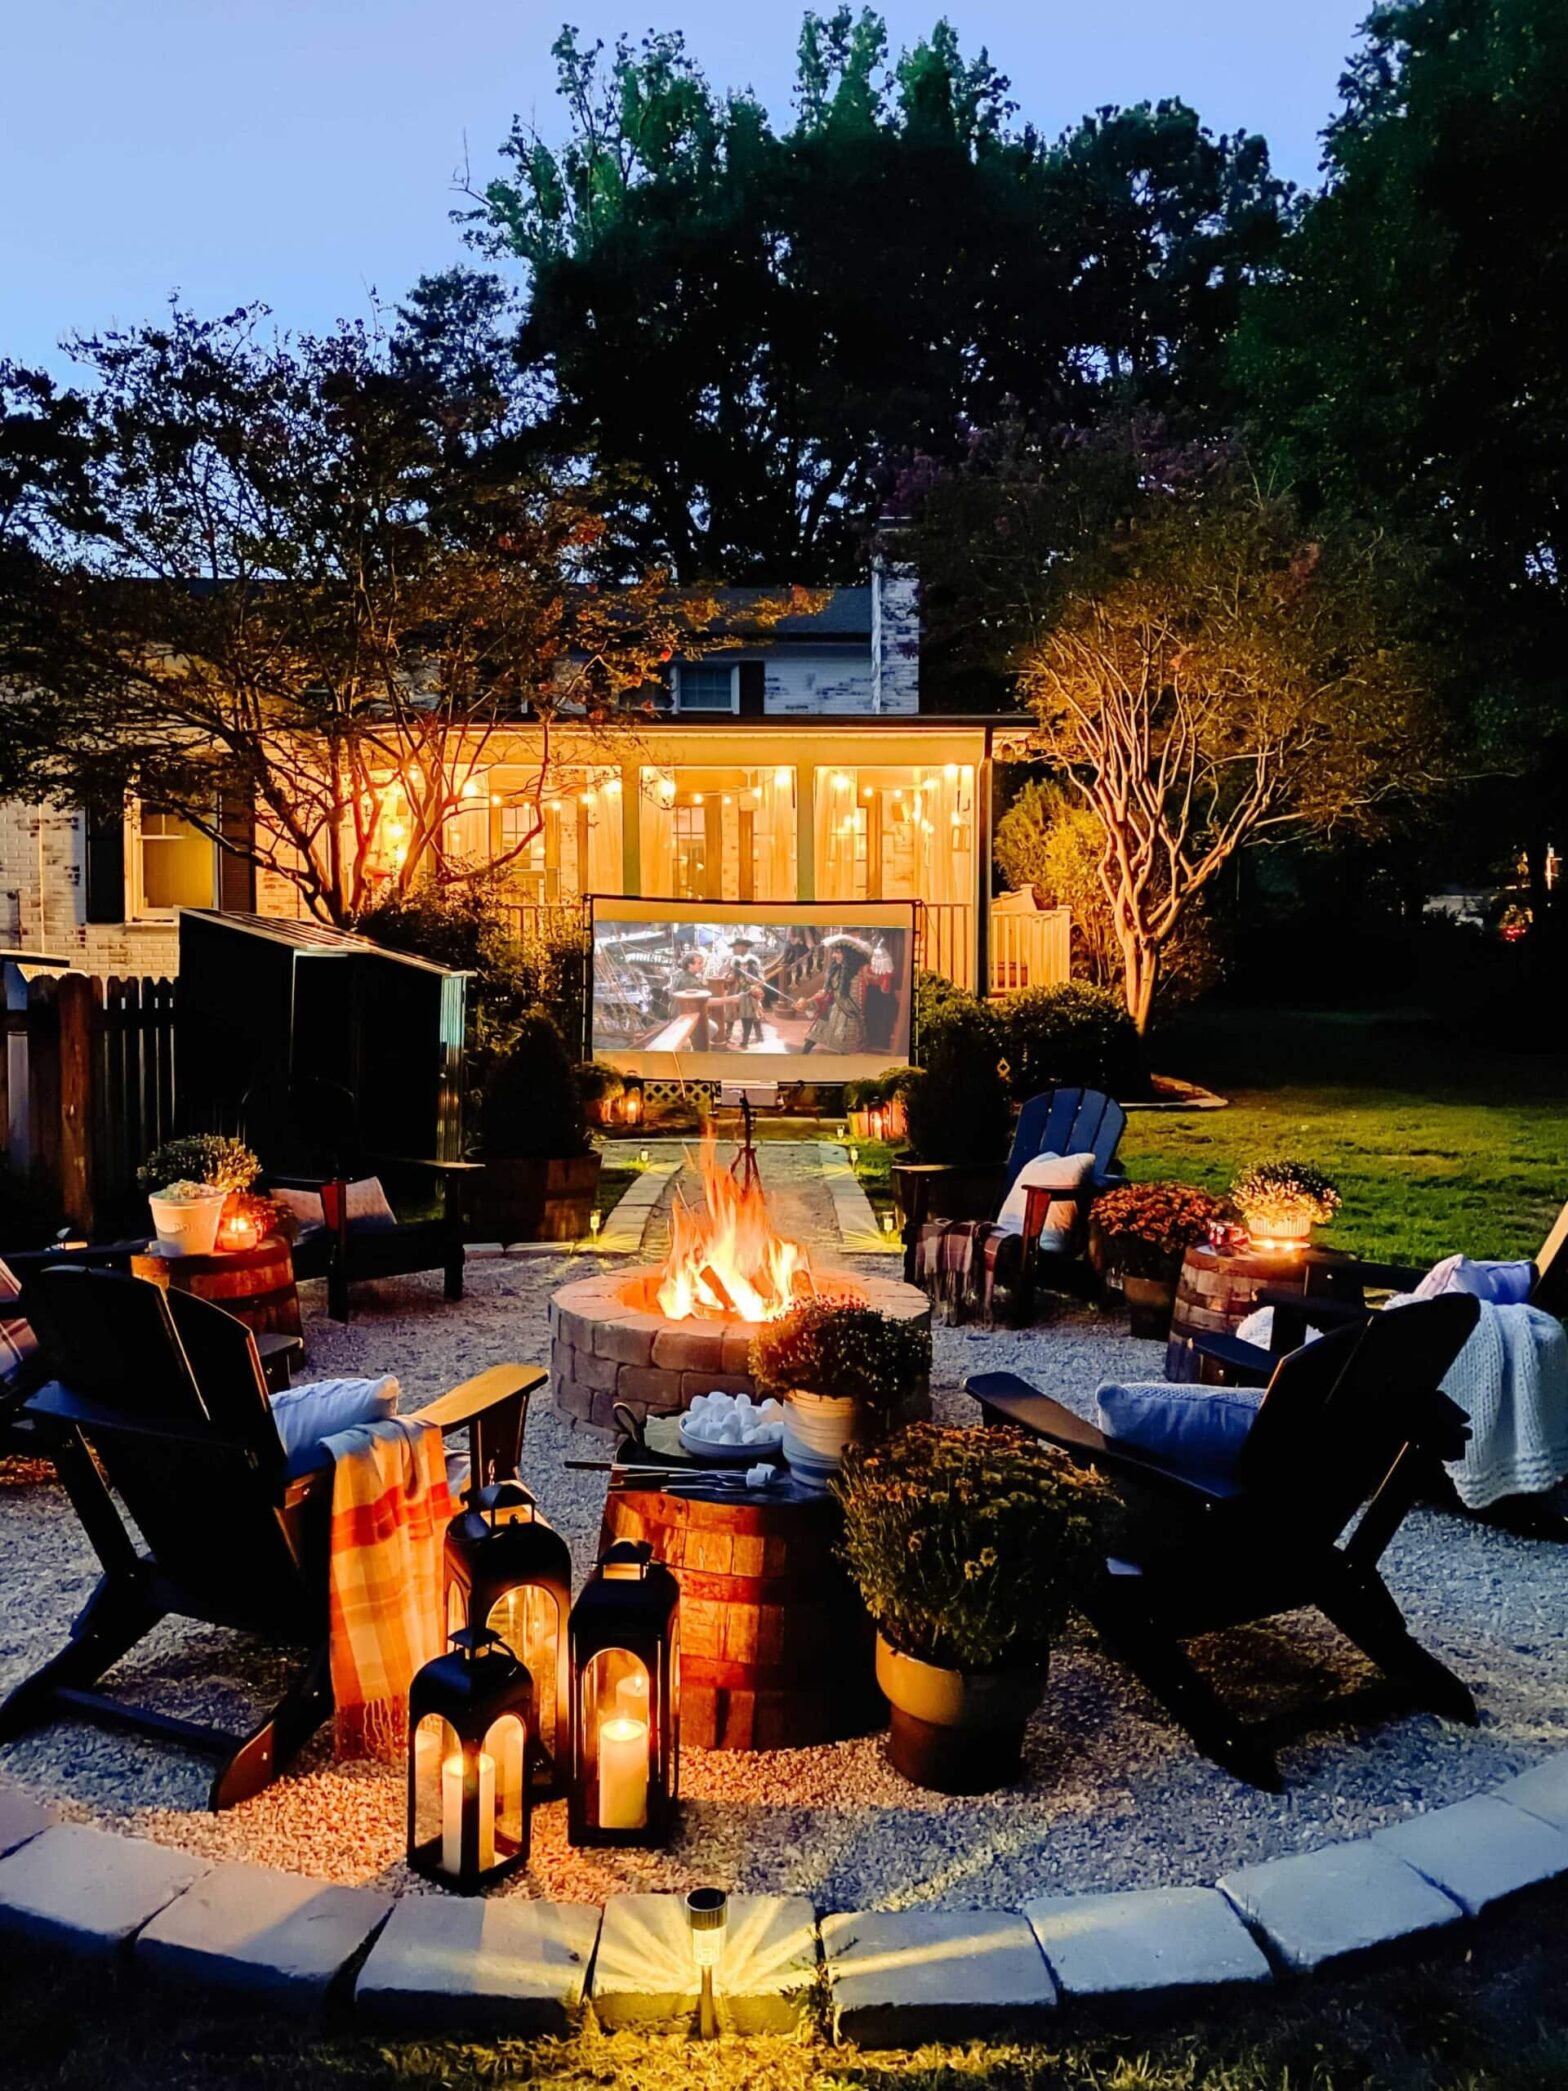 Backyard outdoor movie theater setup 